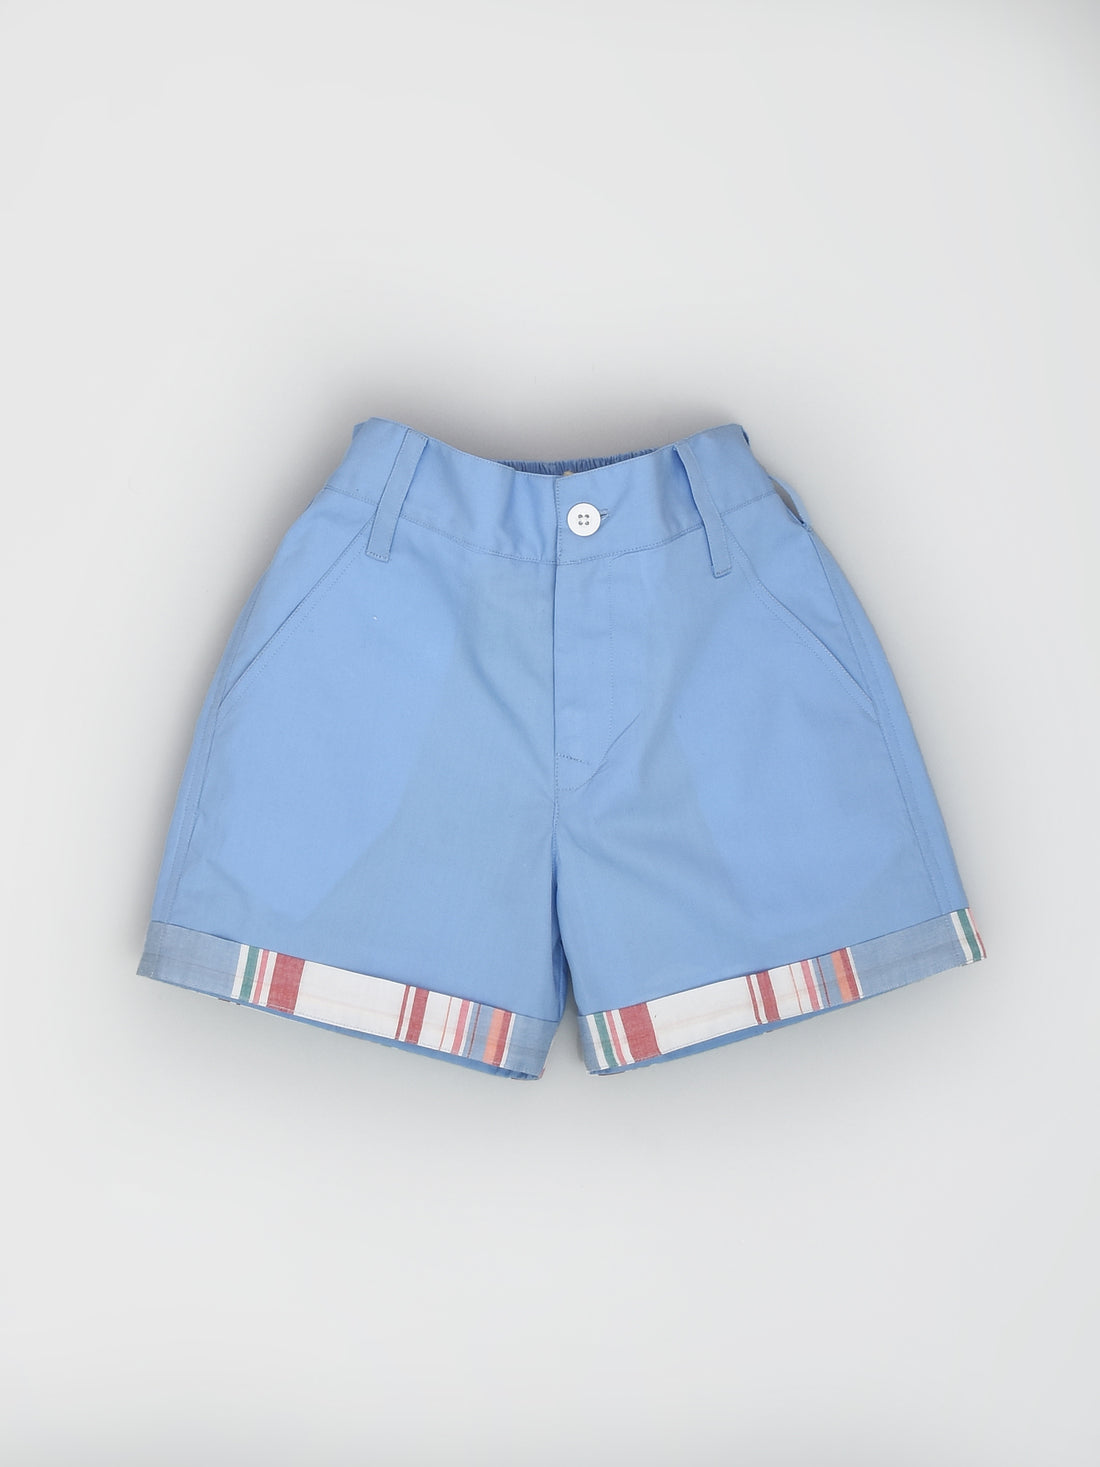 Multicoloured Half Sleeve Shirt & Shorts Casual Co-ord Set for Boys